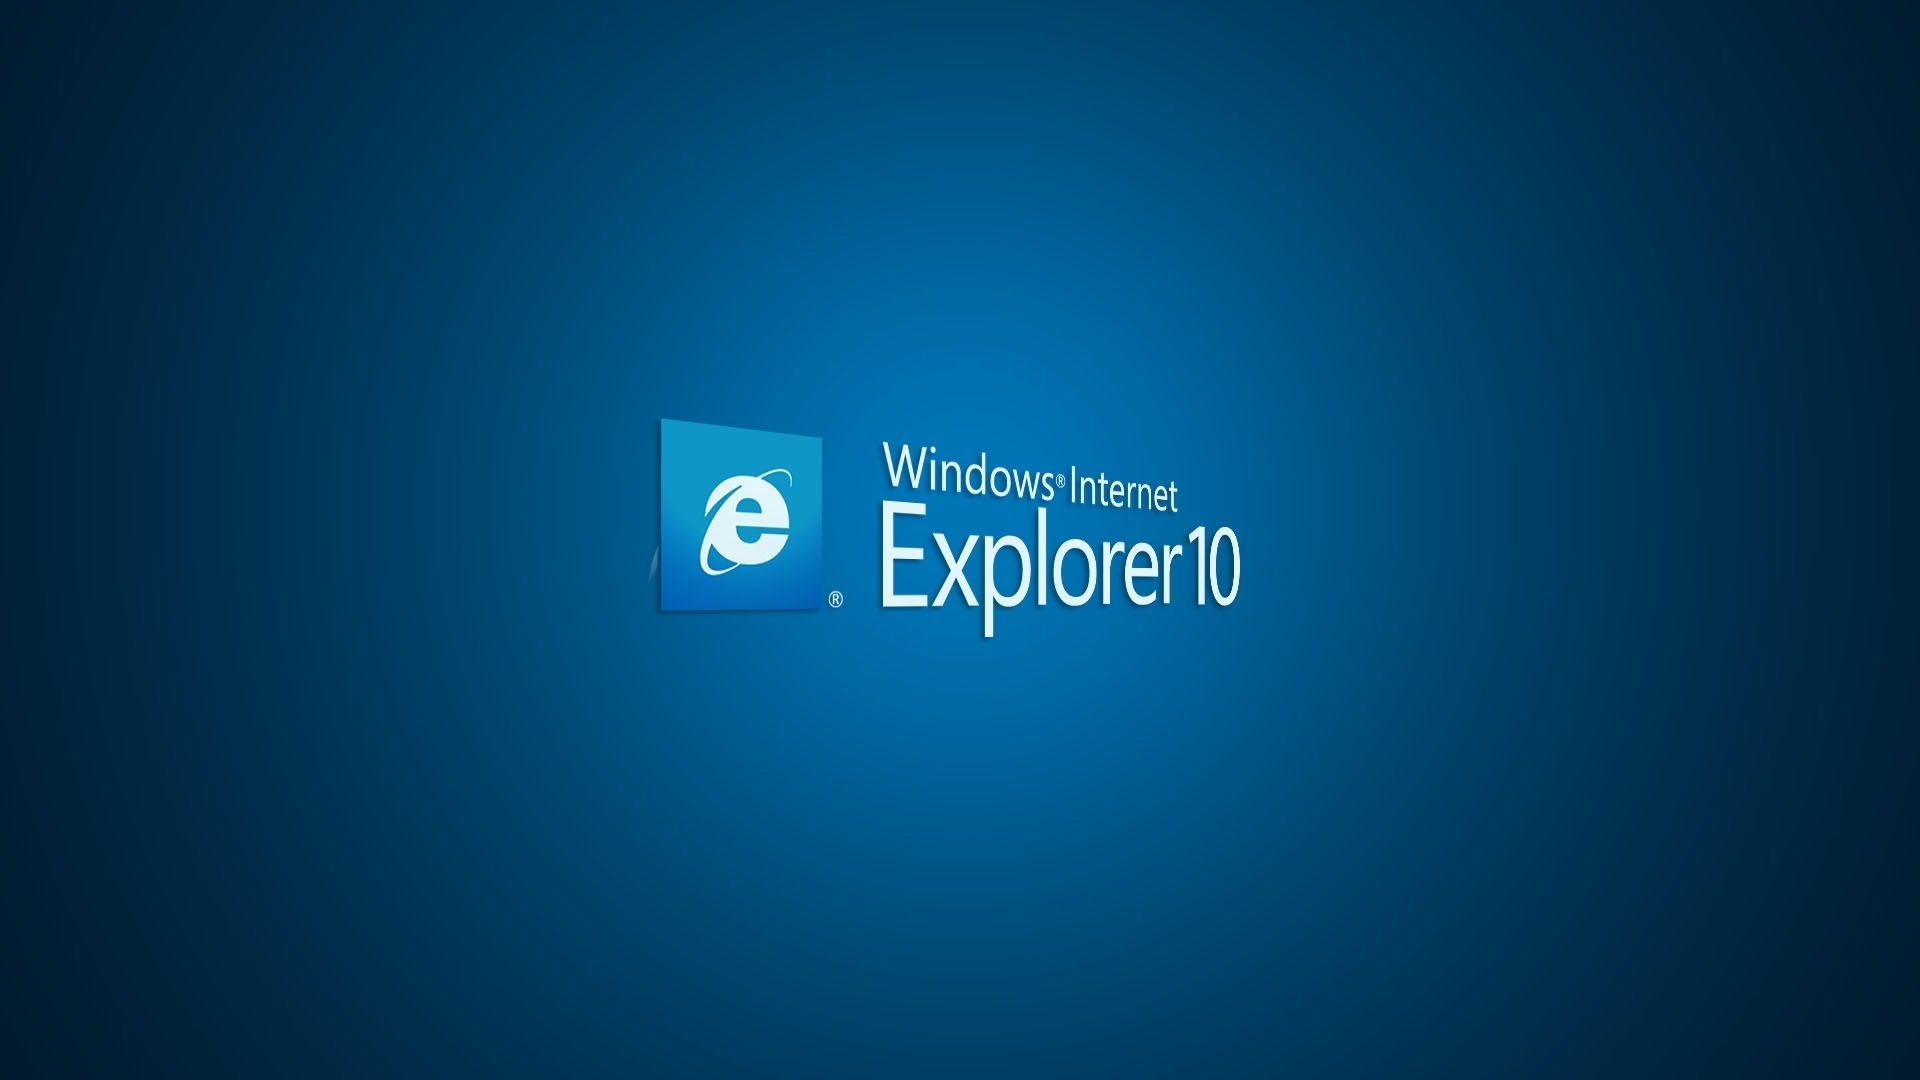 Microsoft Windows Inter Explorer Desktop Pc And Mac